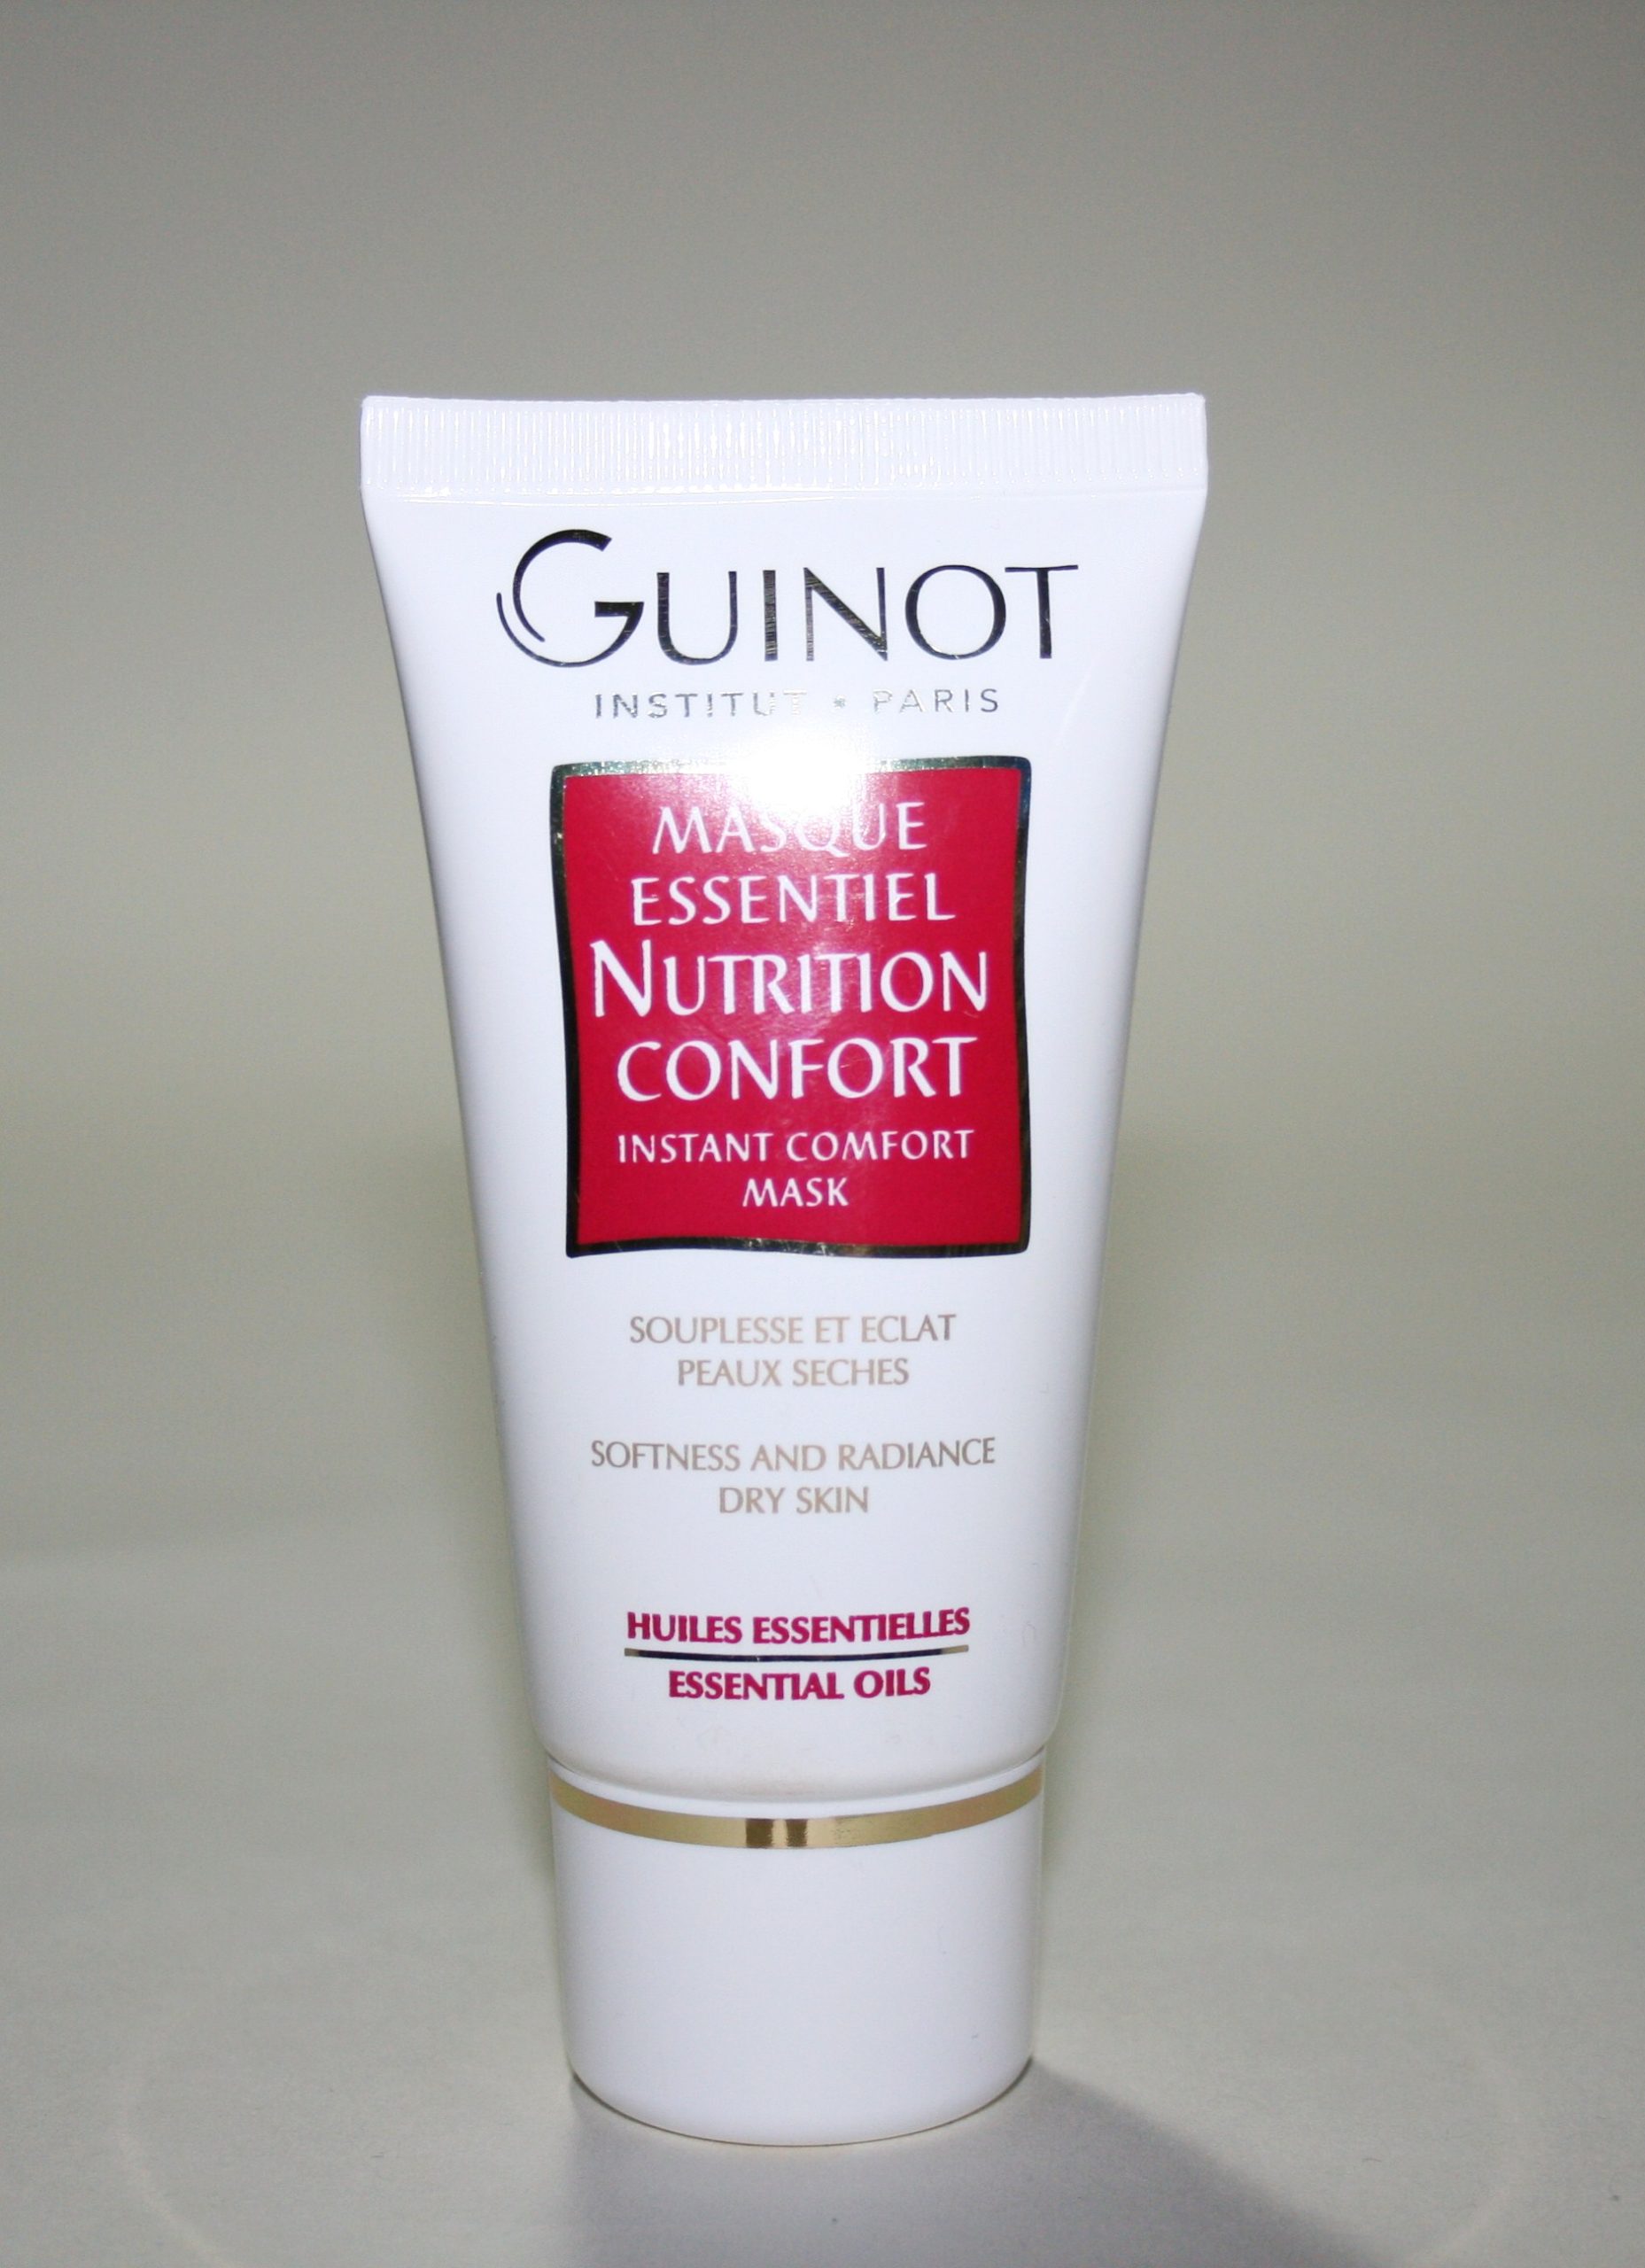 Mask Monday: Guinot Masque Essentiel Nutrition Confort